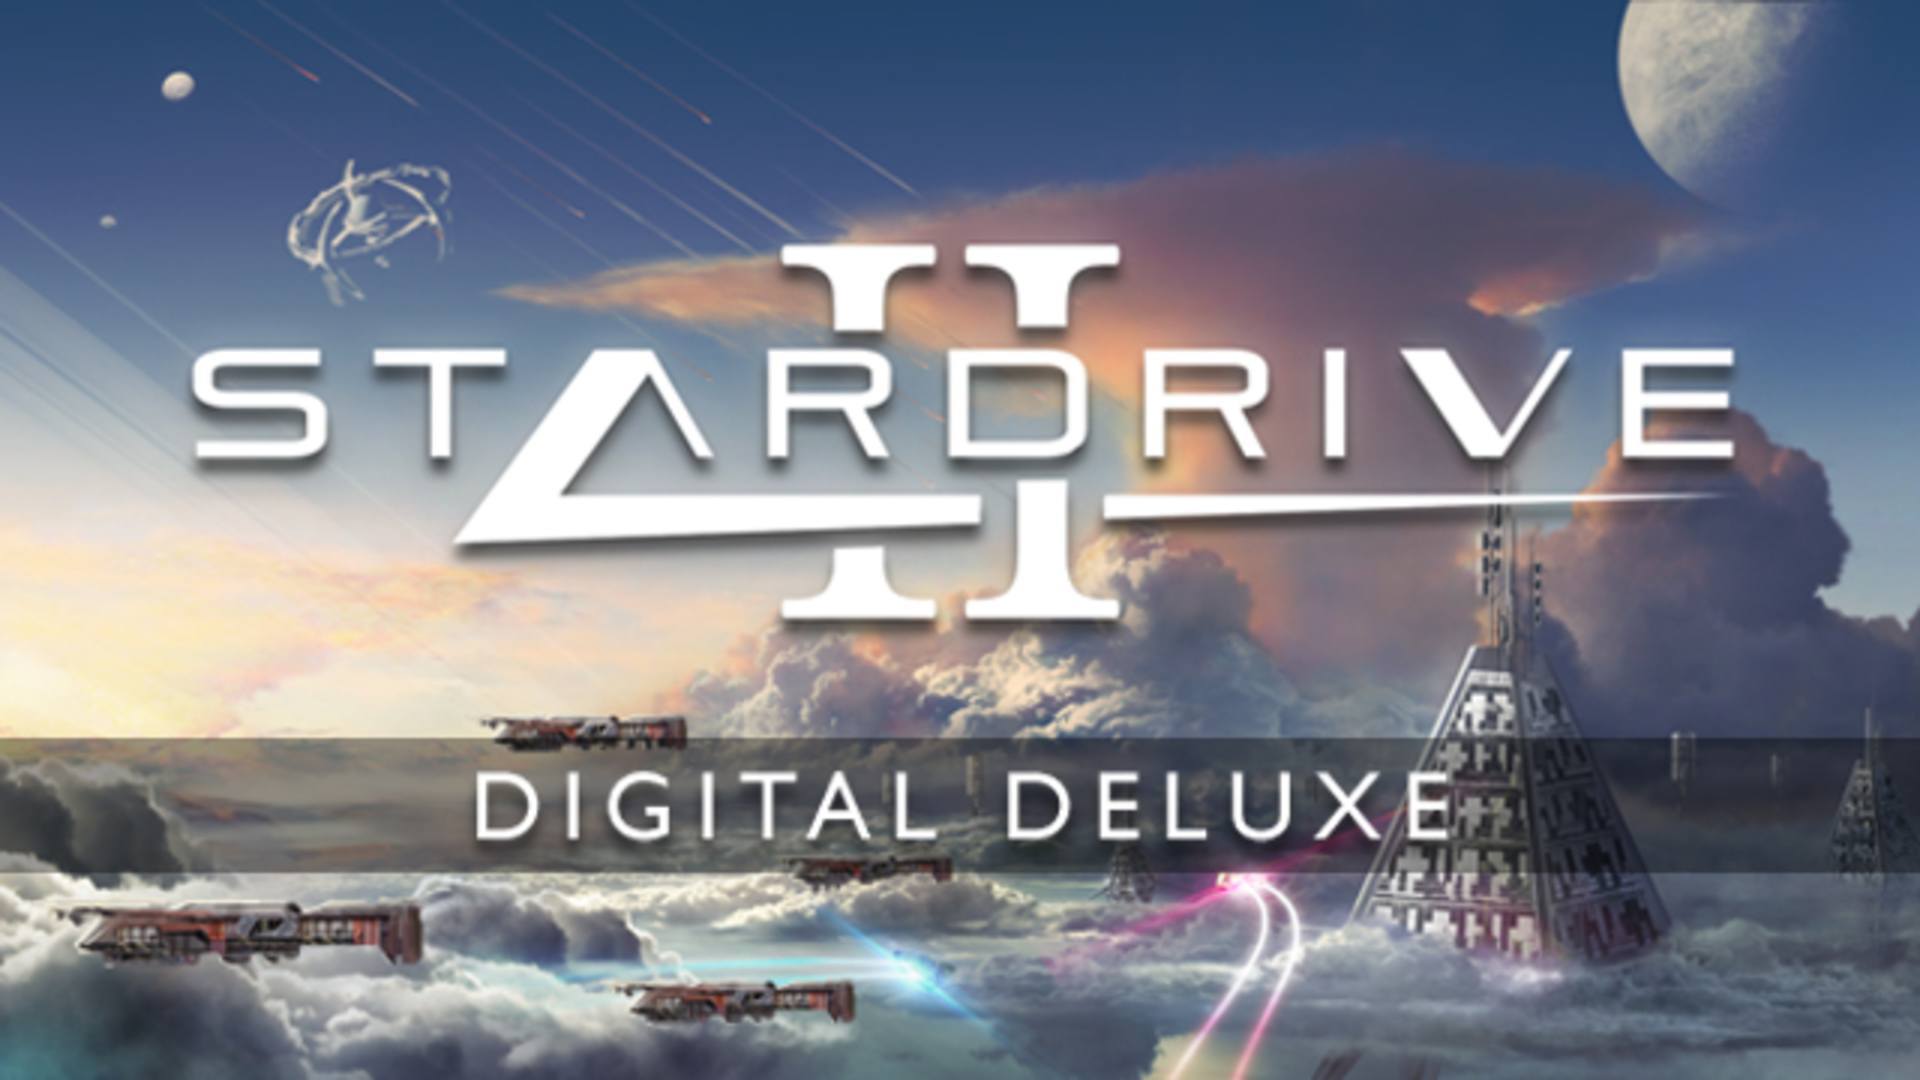 stardrive 2 digital deluxe edition